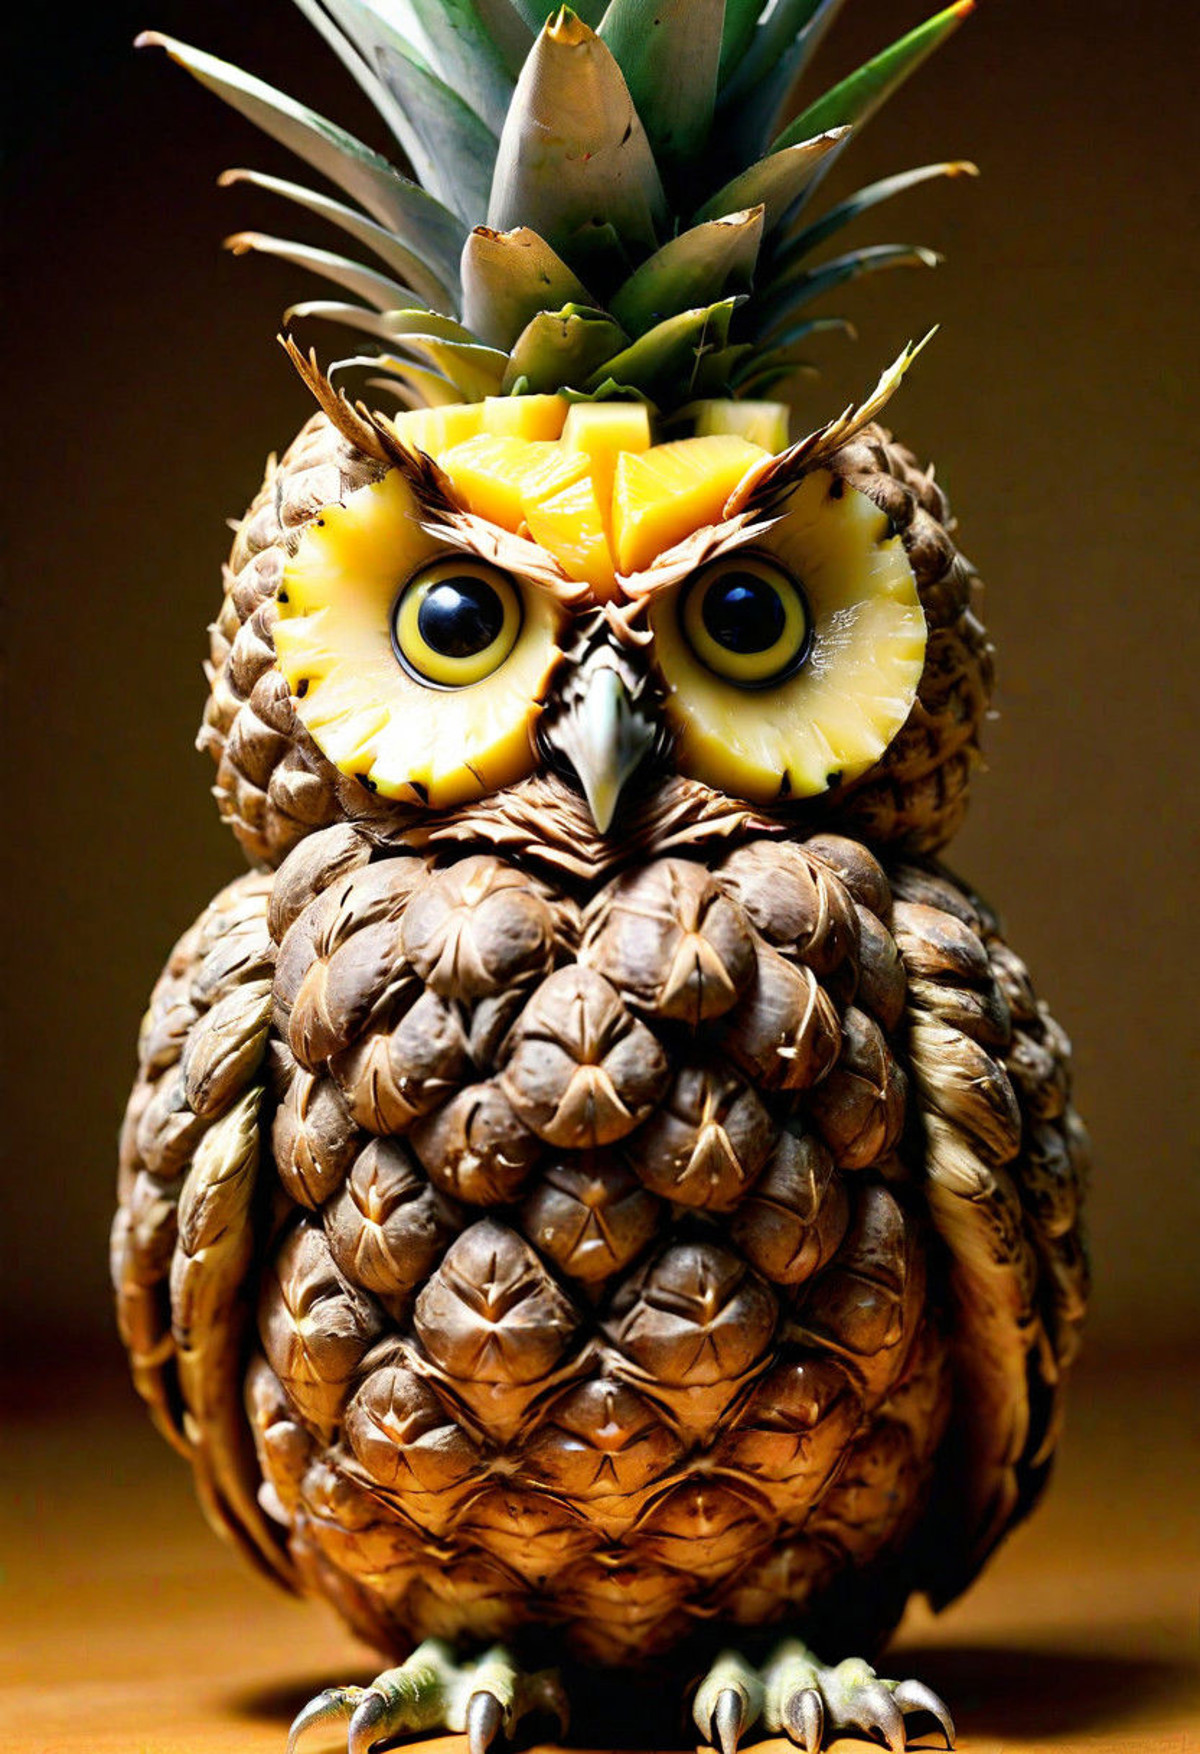 (pineapple) owl hybrid, sharp focus, award-winning photograph